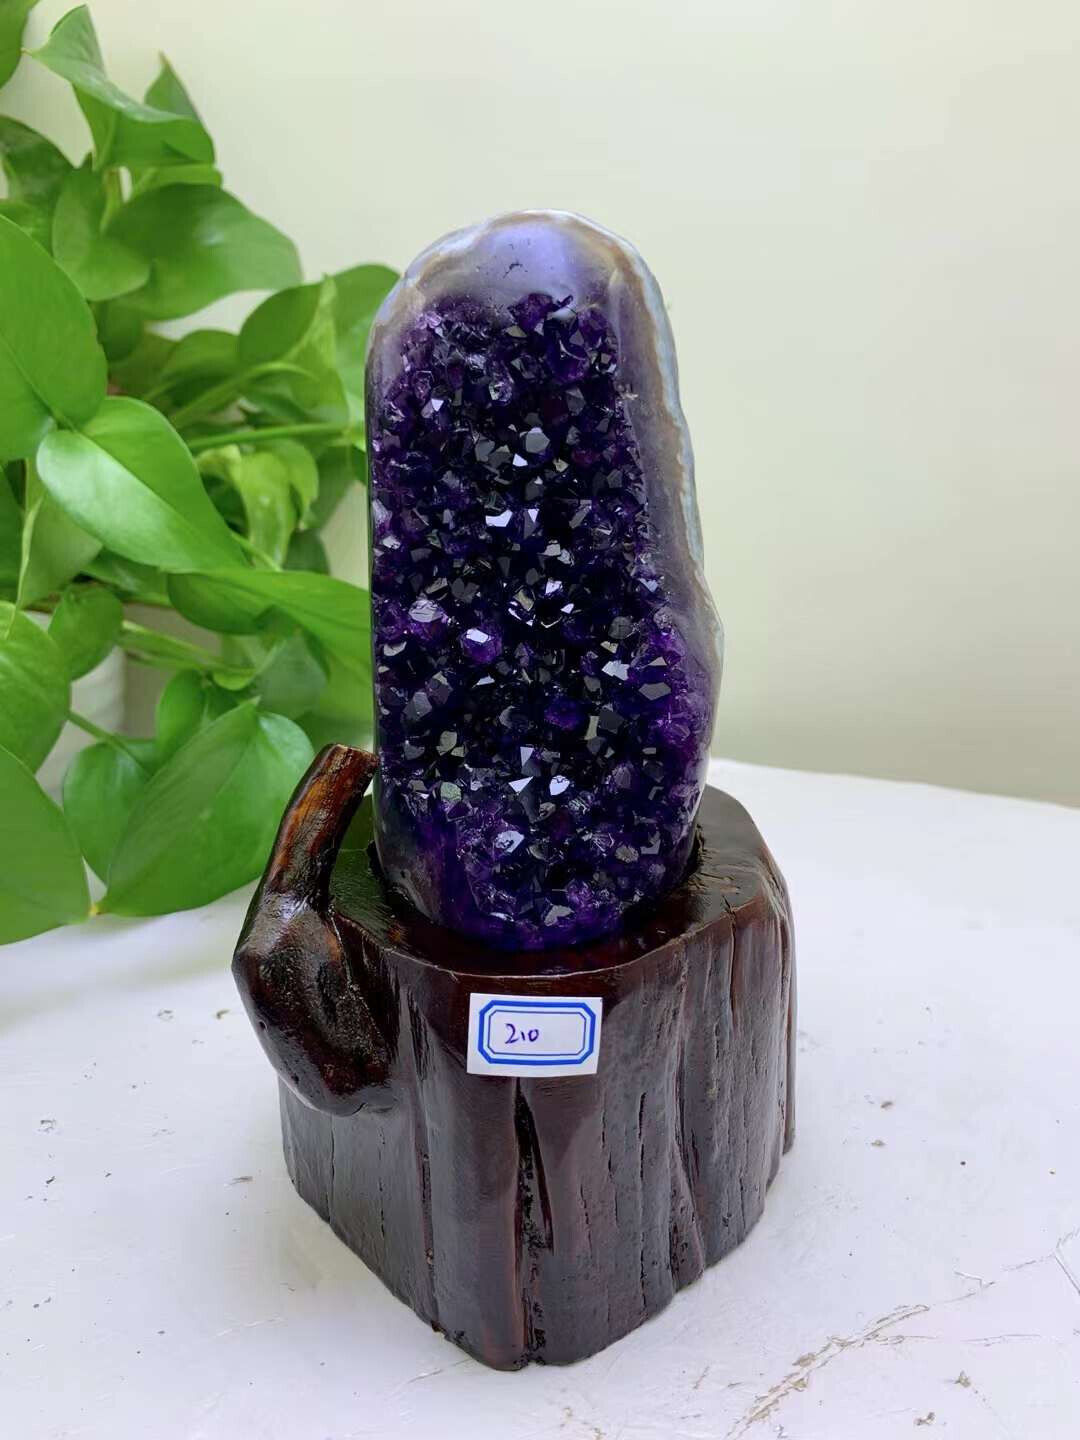 2000g natural amethyst geode quartz crystal cluster healing gift decor+stand